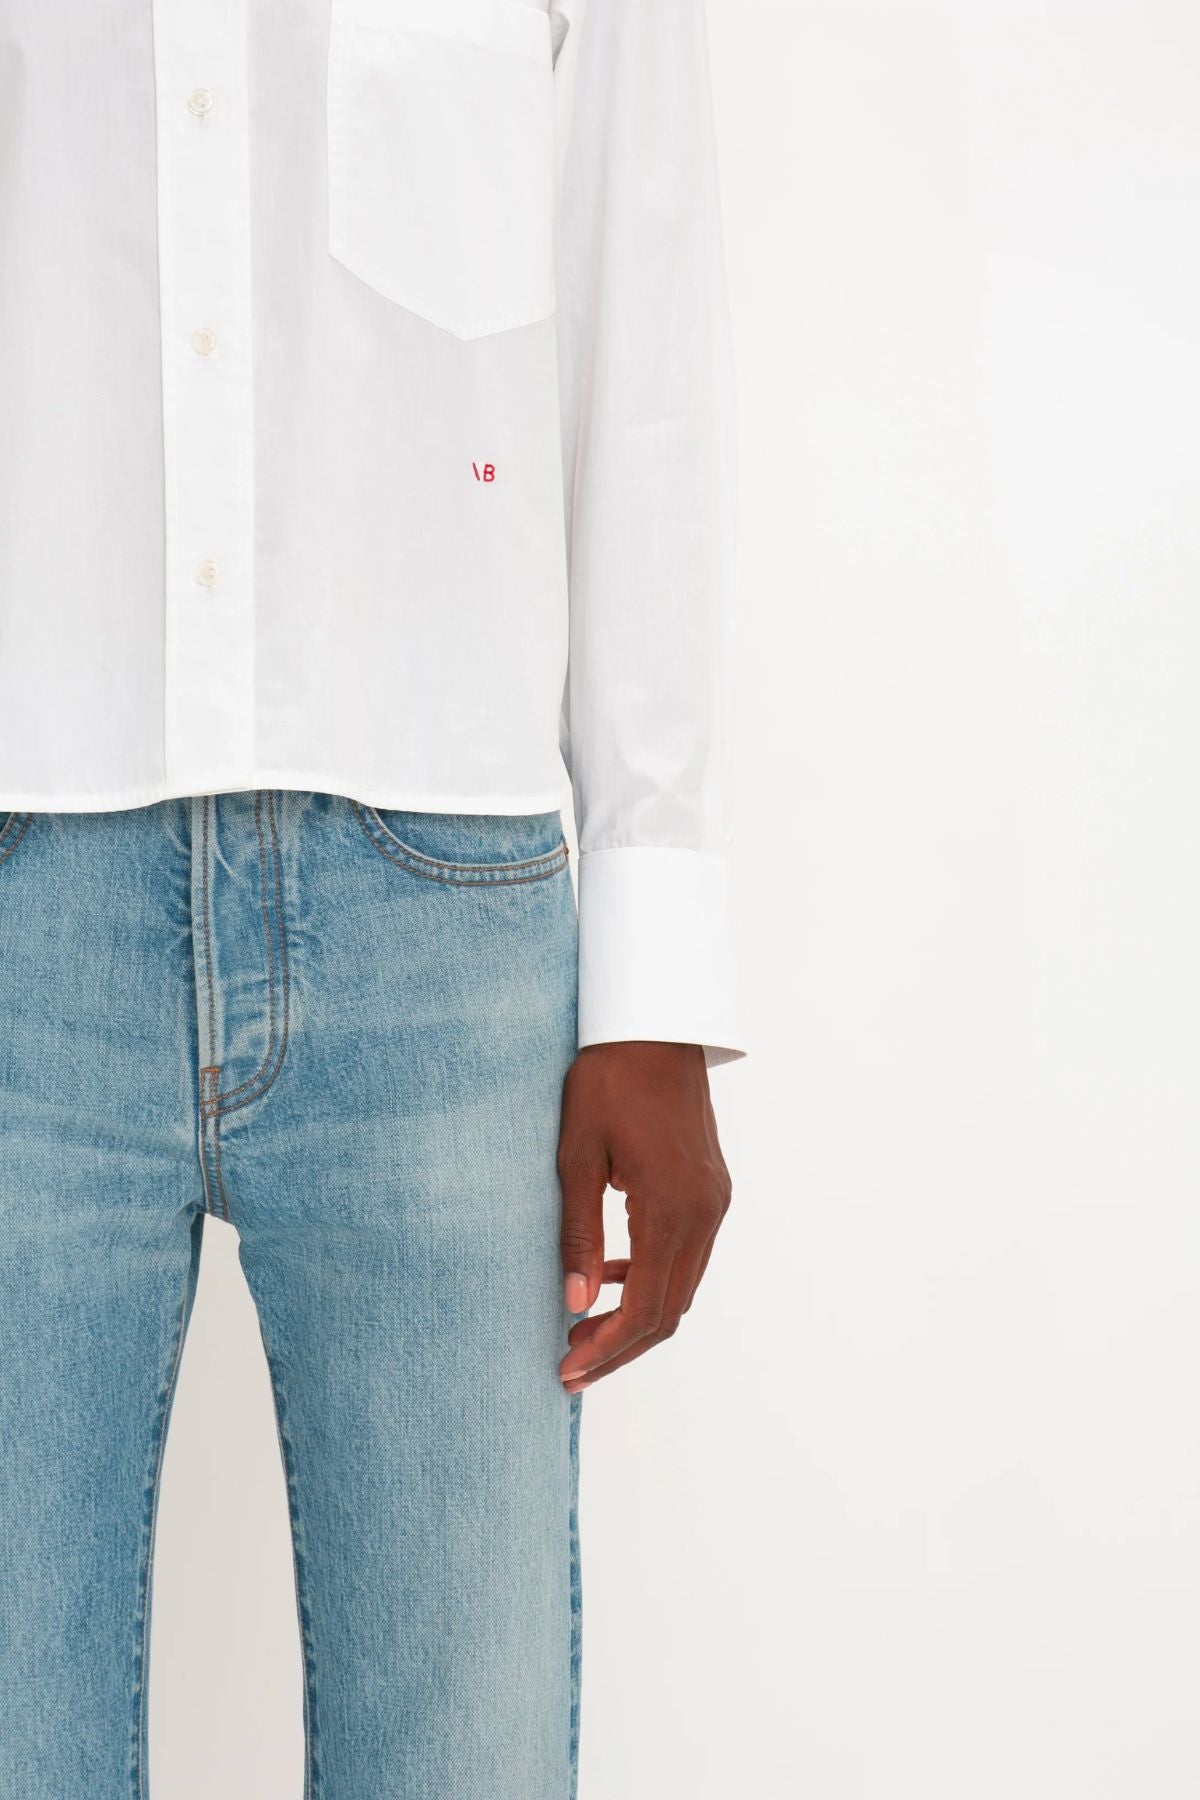 Victoria Beckham Long Sleeve Cropped Shirt - White